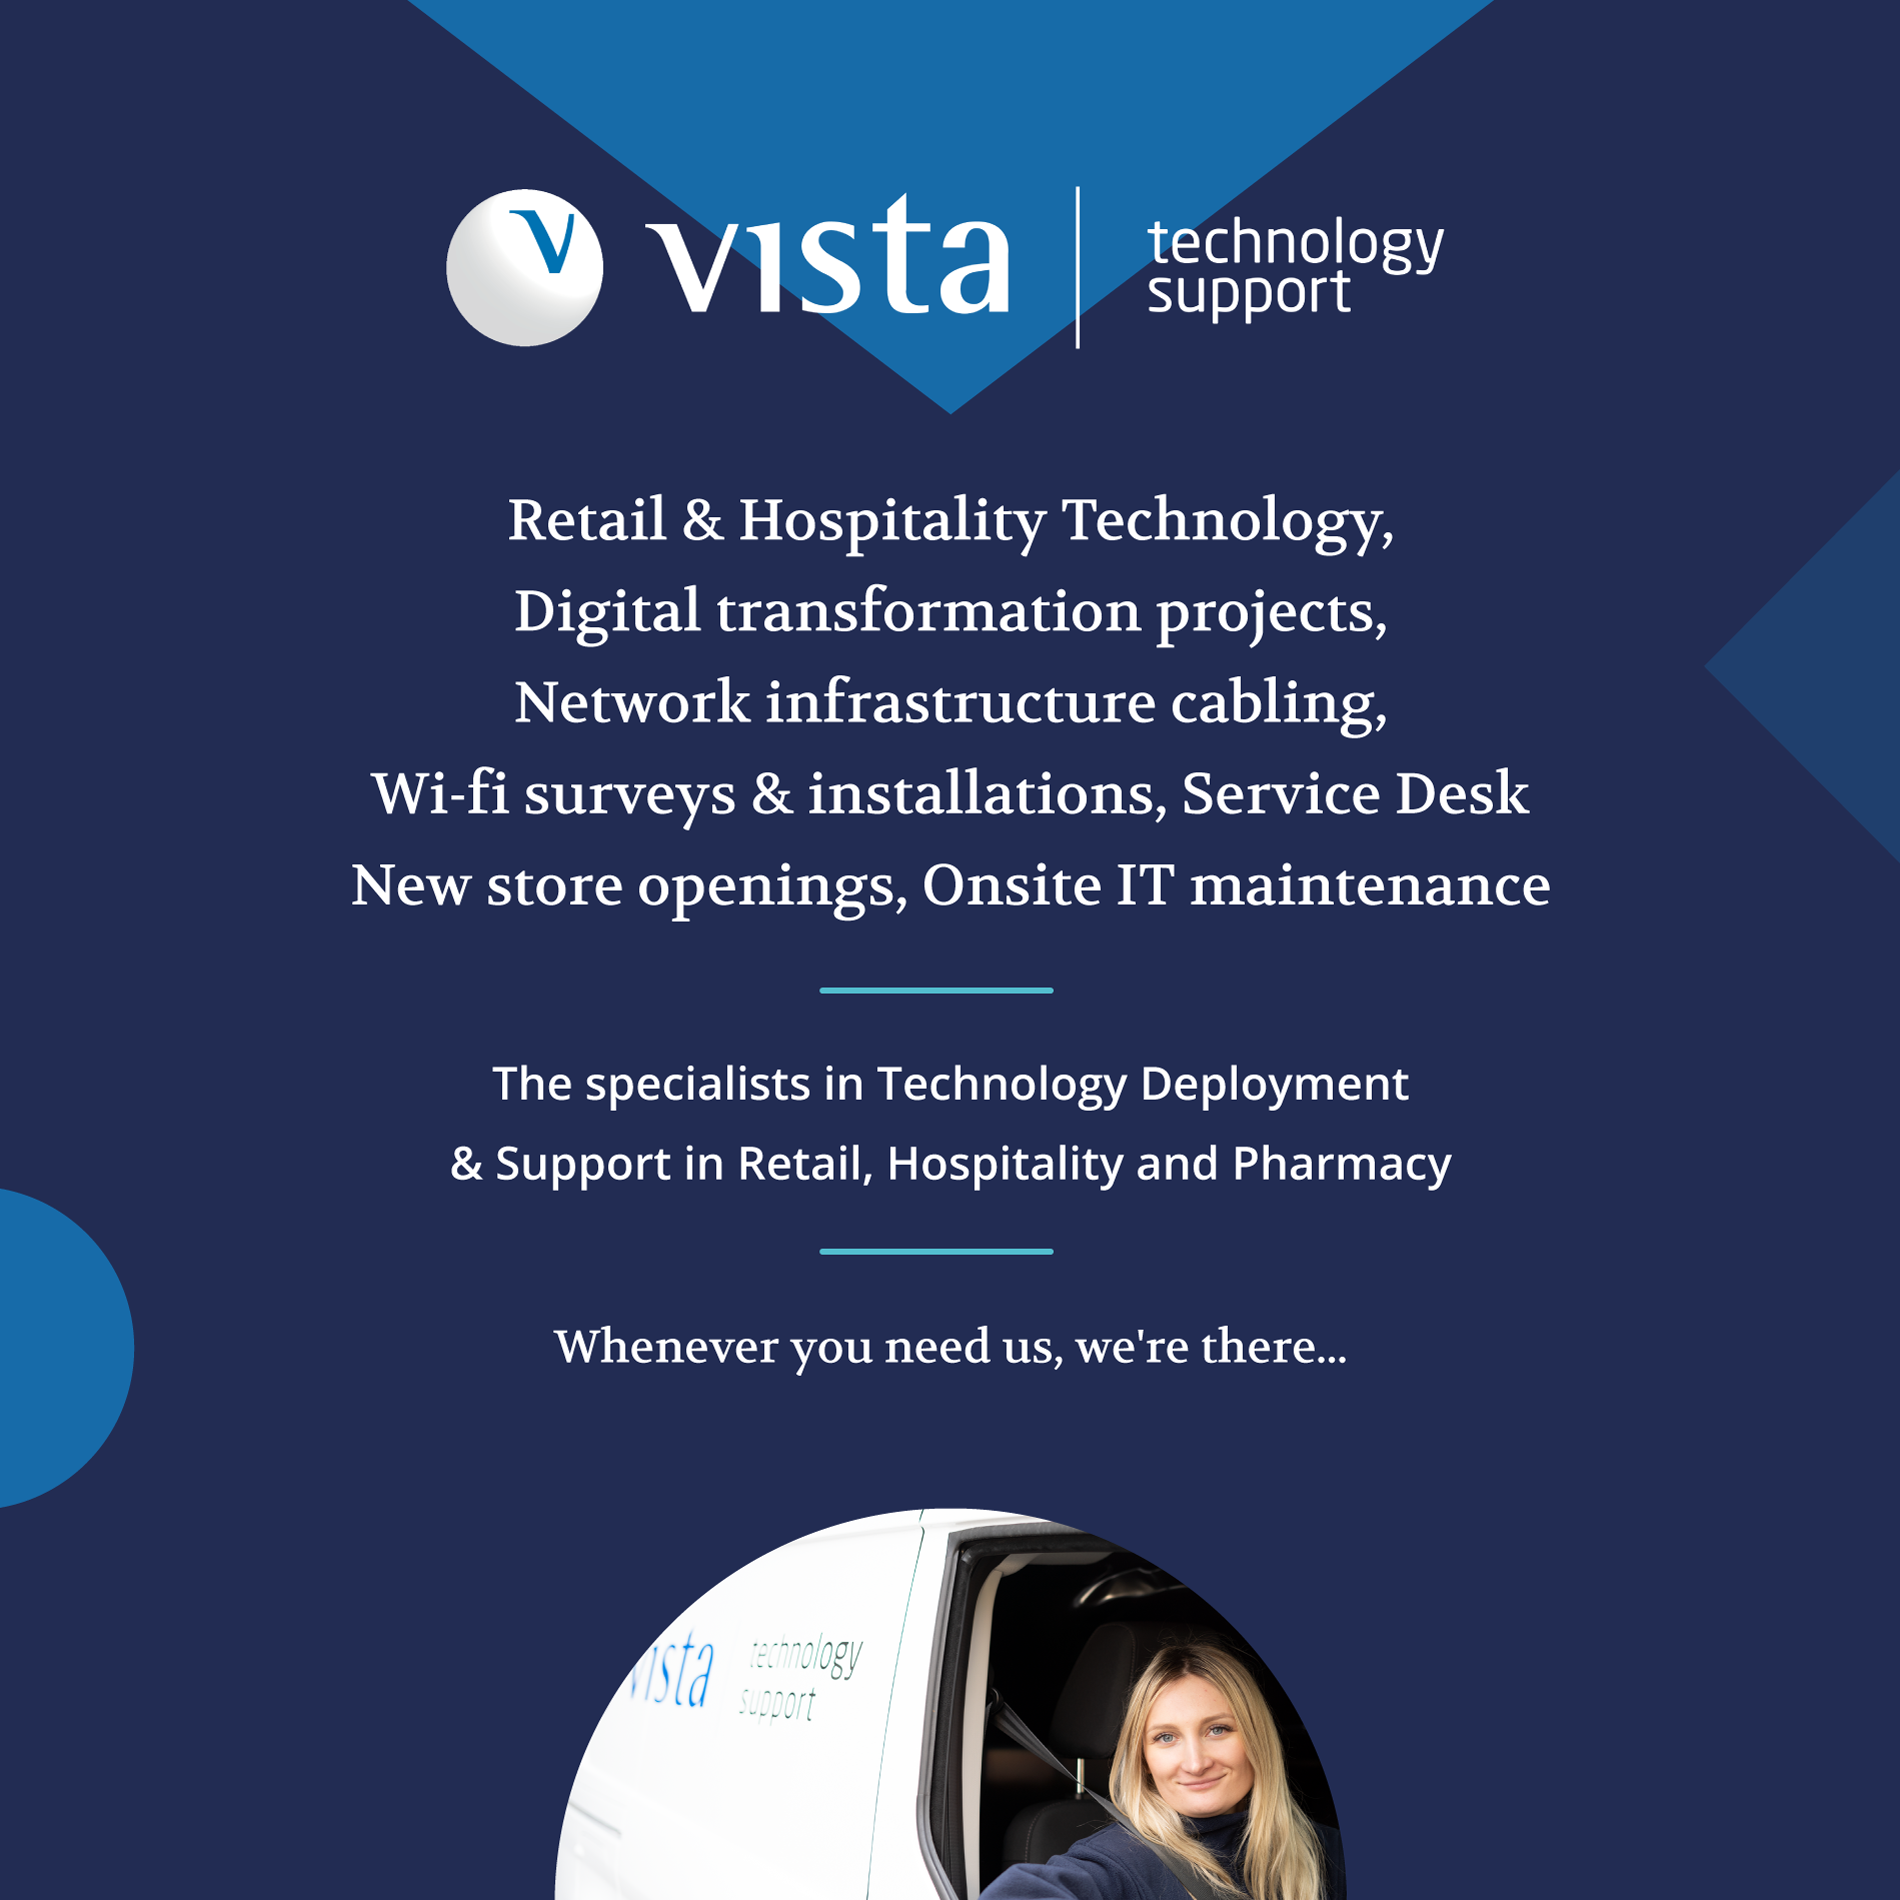 Winner Image - Vista Technology Support